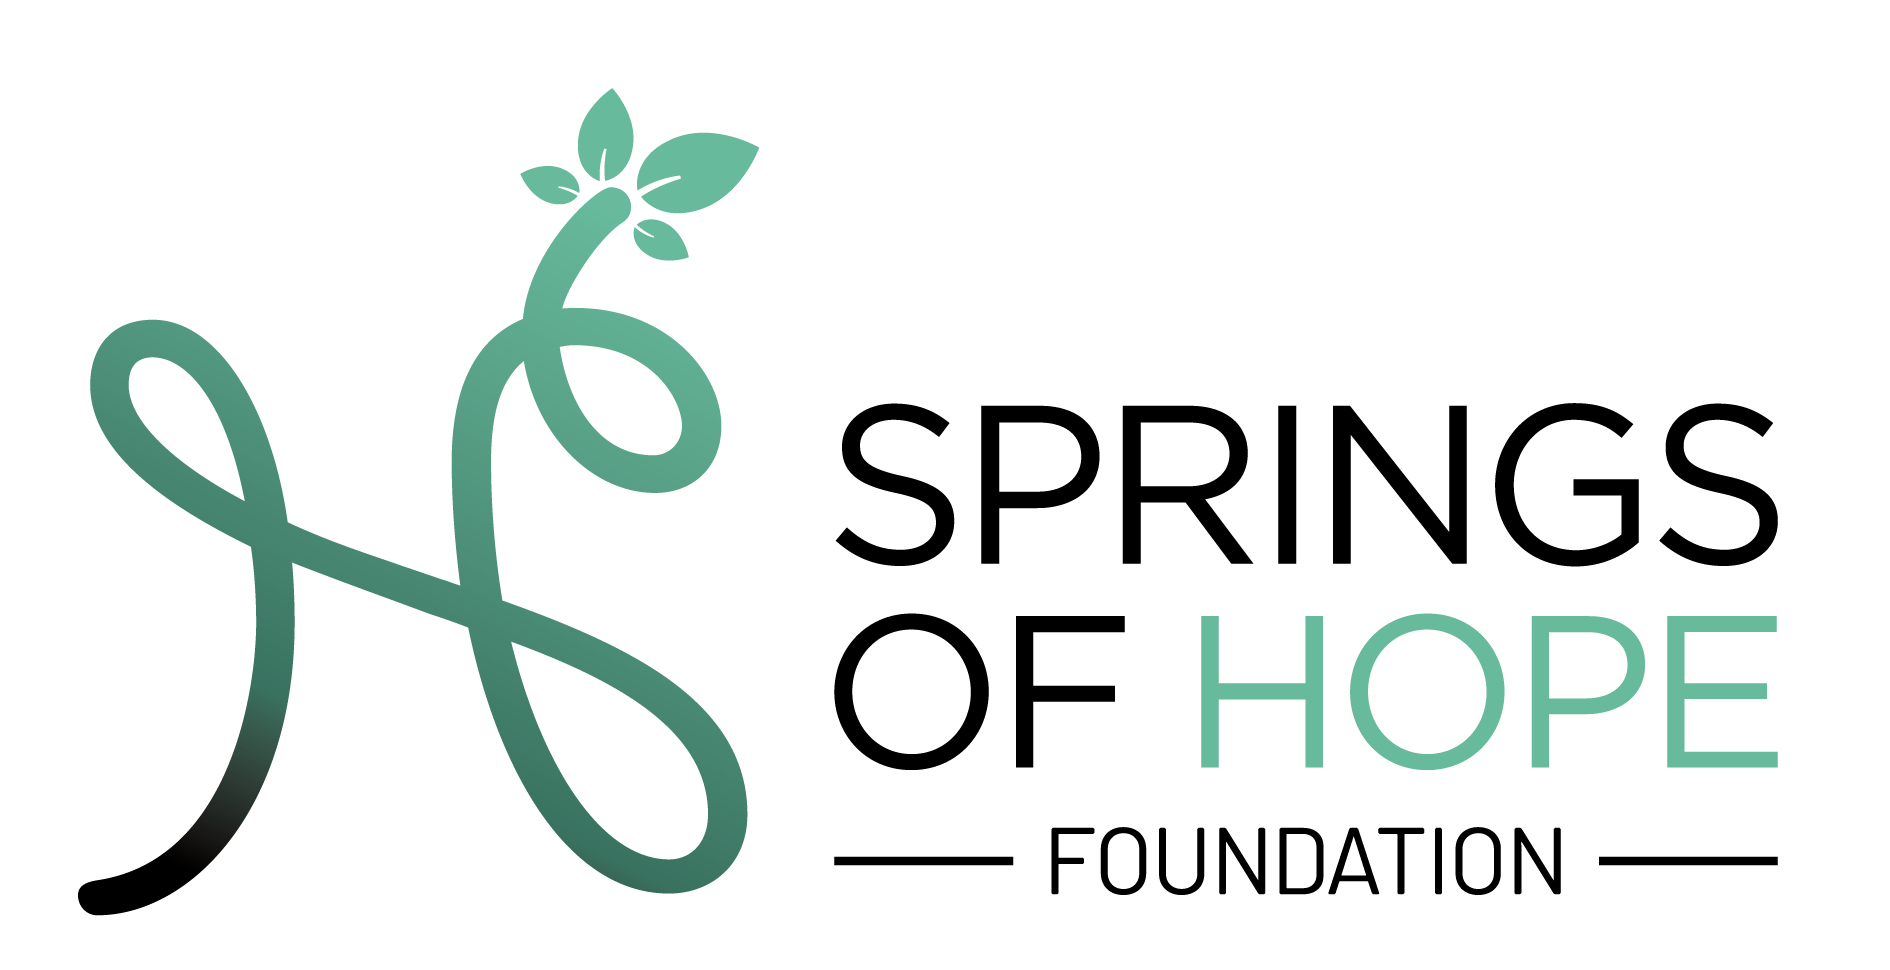 Springs of Hope logo